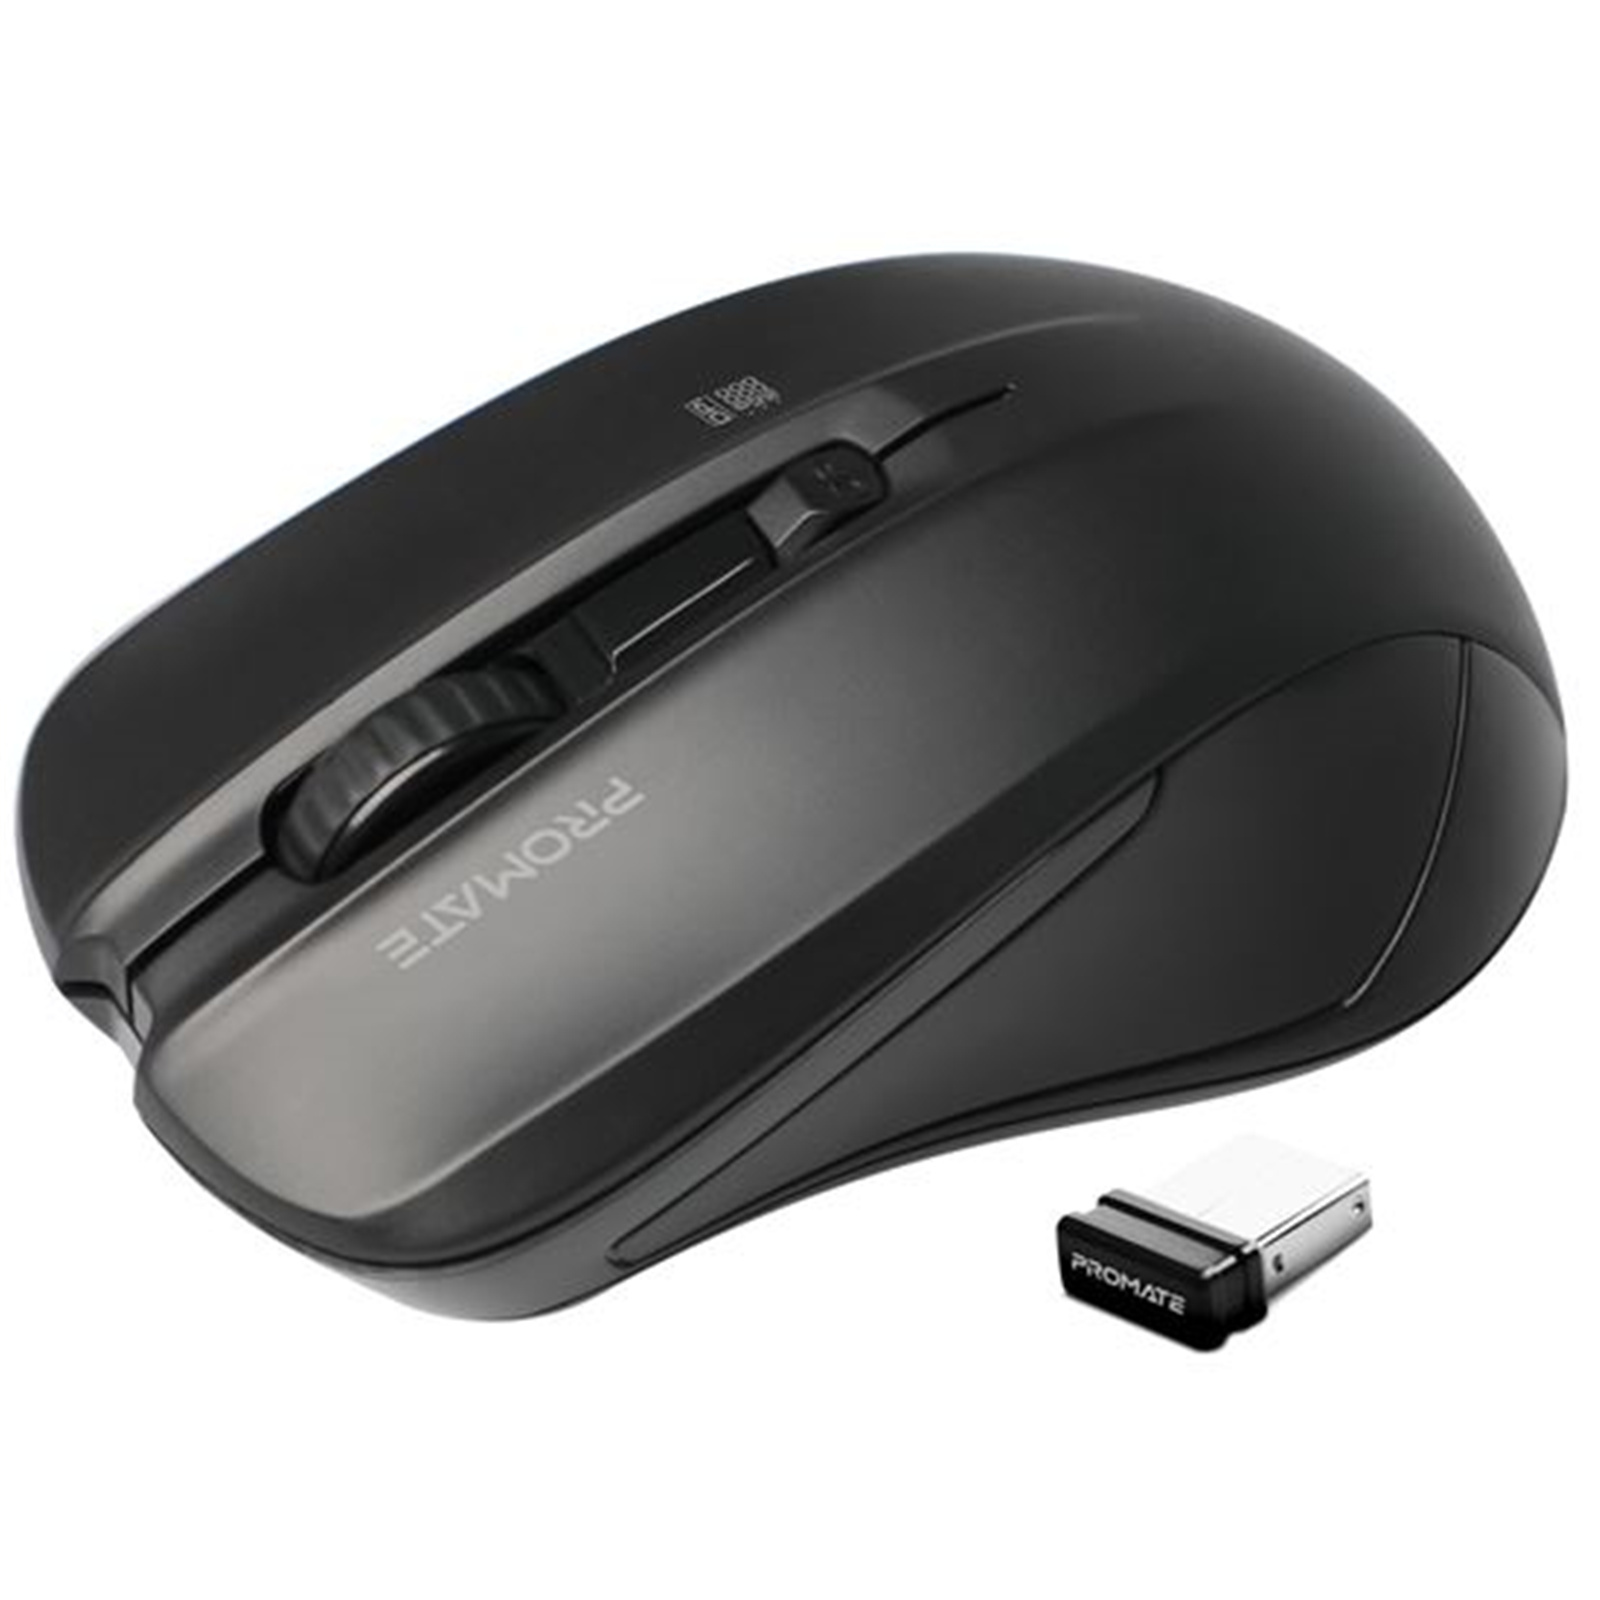 Buy the Promate CONTOUR.BLK Ergonomic Wireless Mouse - Black